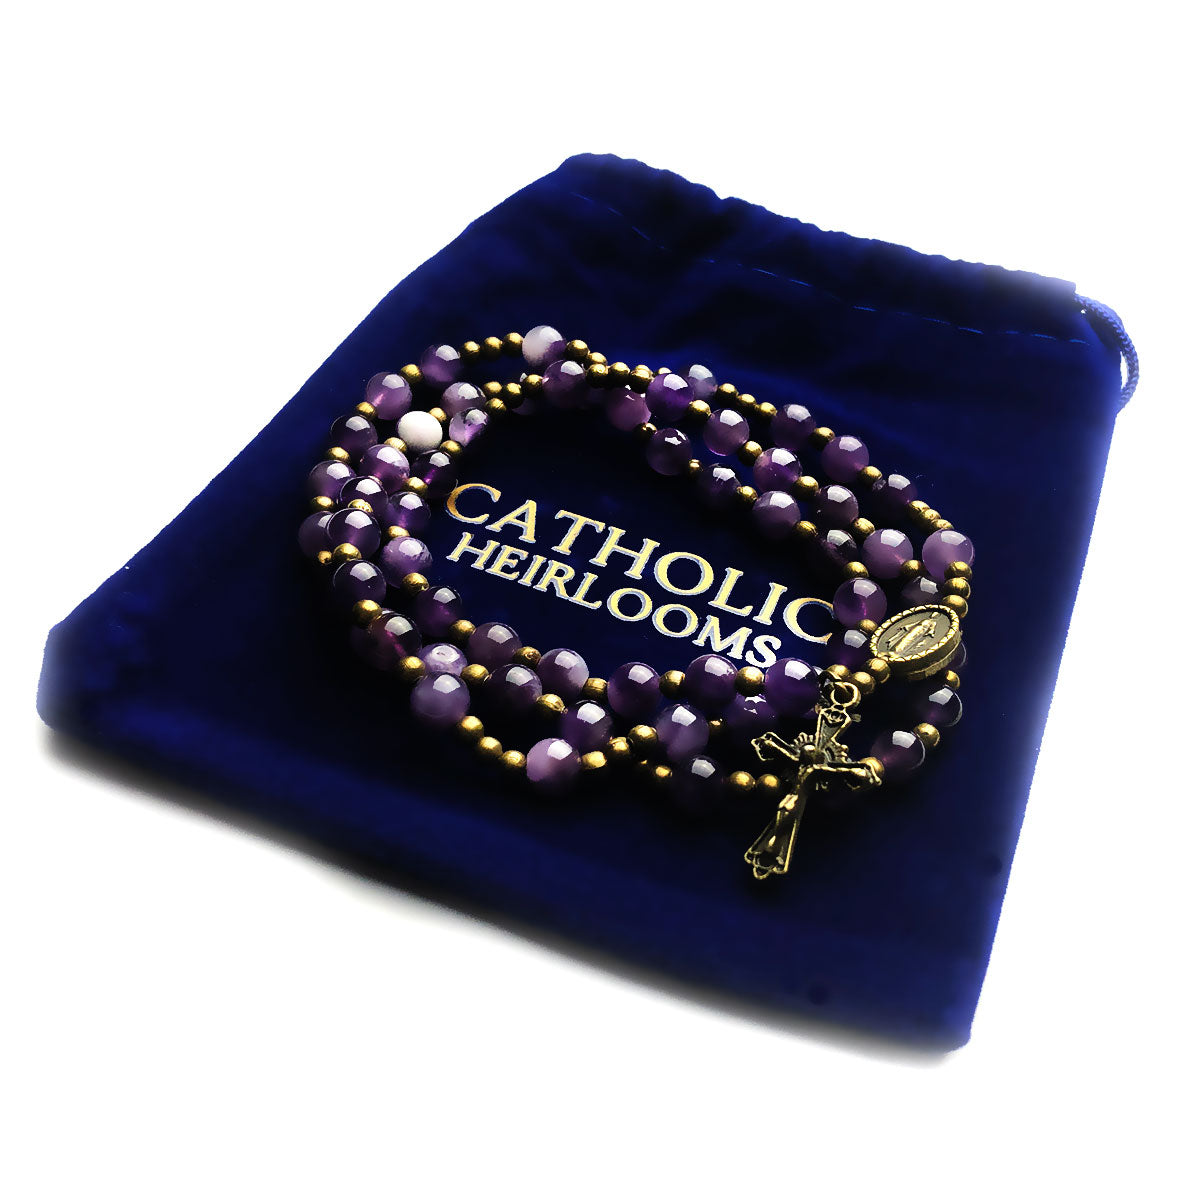 Amethyst Stone Full 5-Decade Catholic Rosary Bracelet by Catholic Heirlooms - Confirmation - Holy Communion Gift